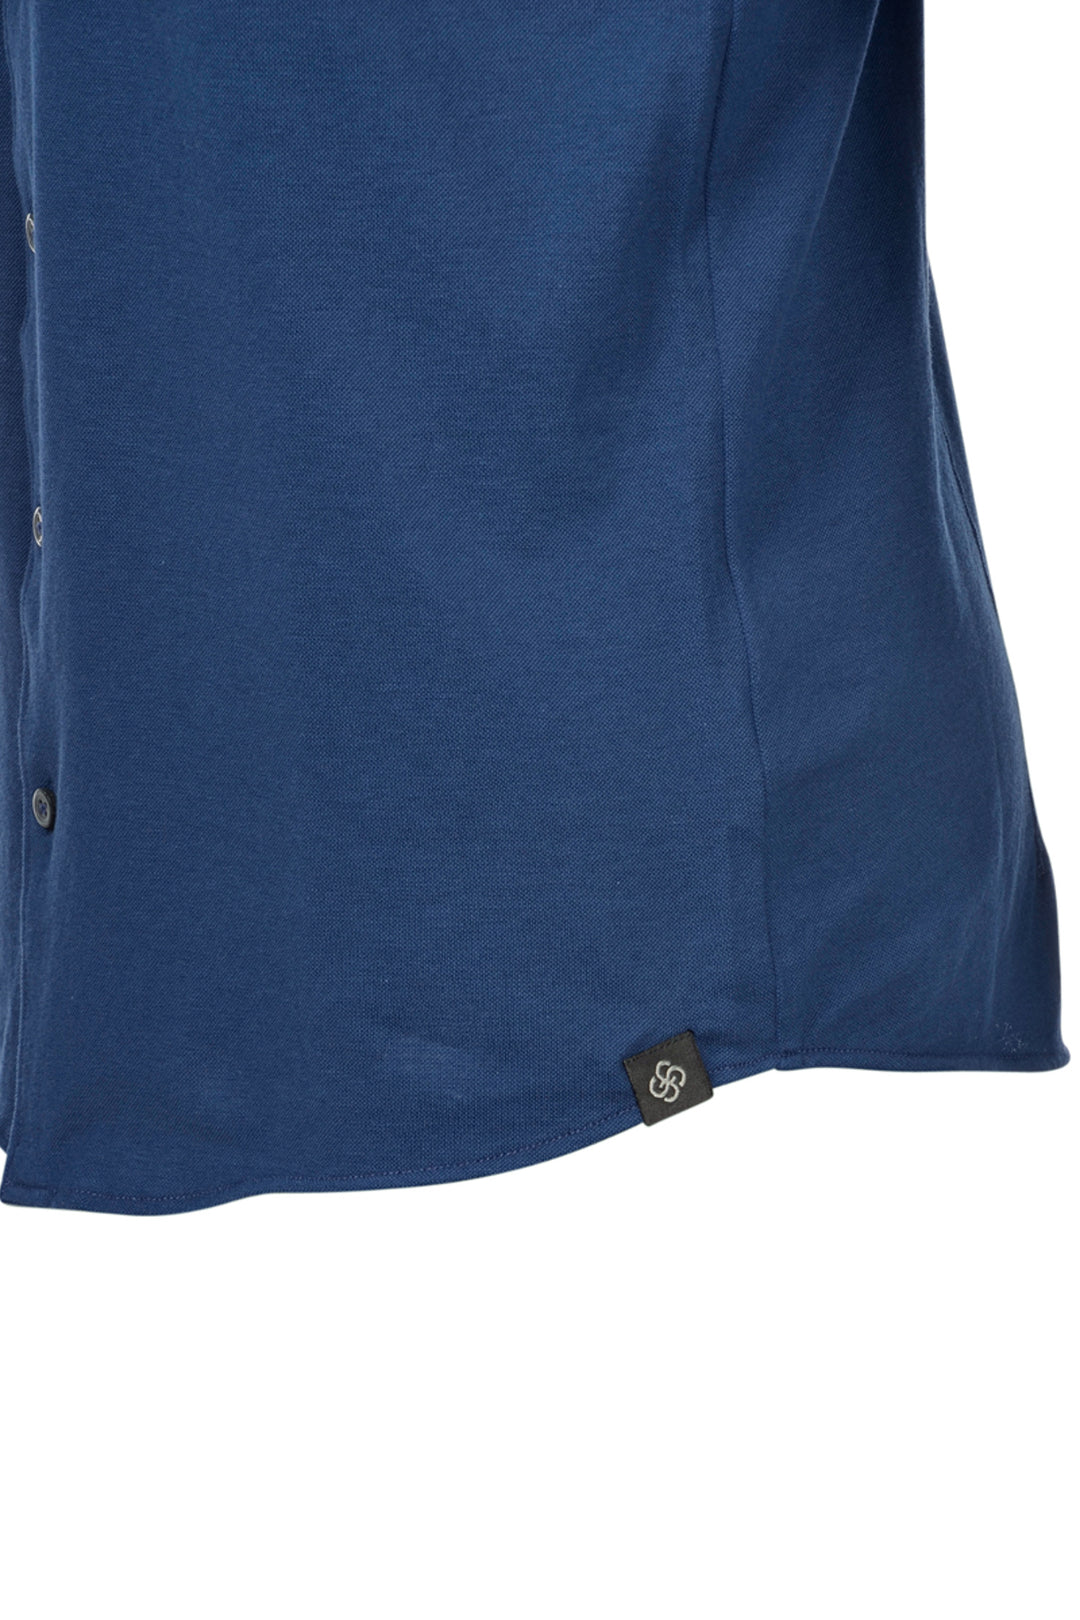 GRAN SASSO Camicia blu in piquet di cotone light - Mancinelli 1954